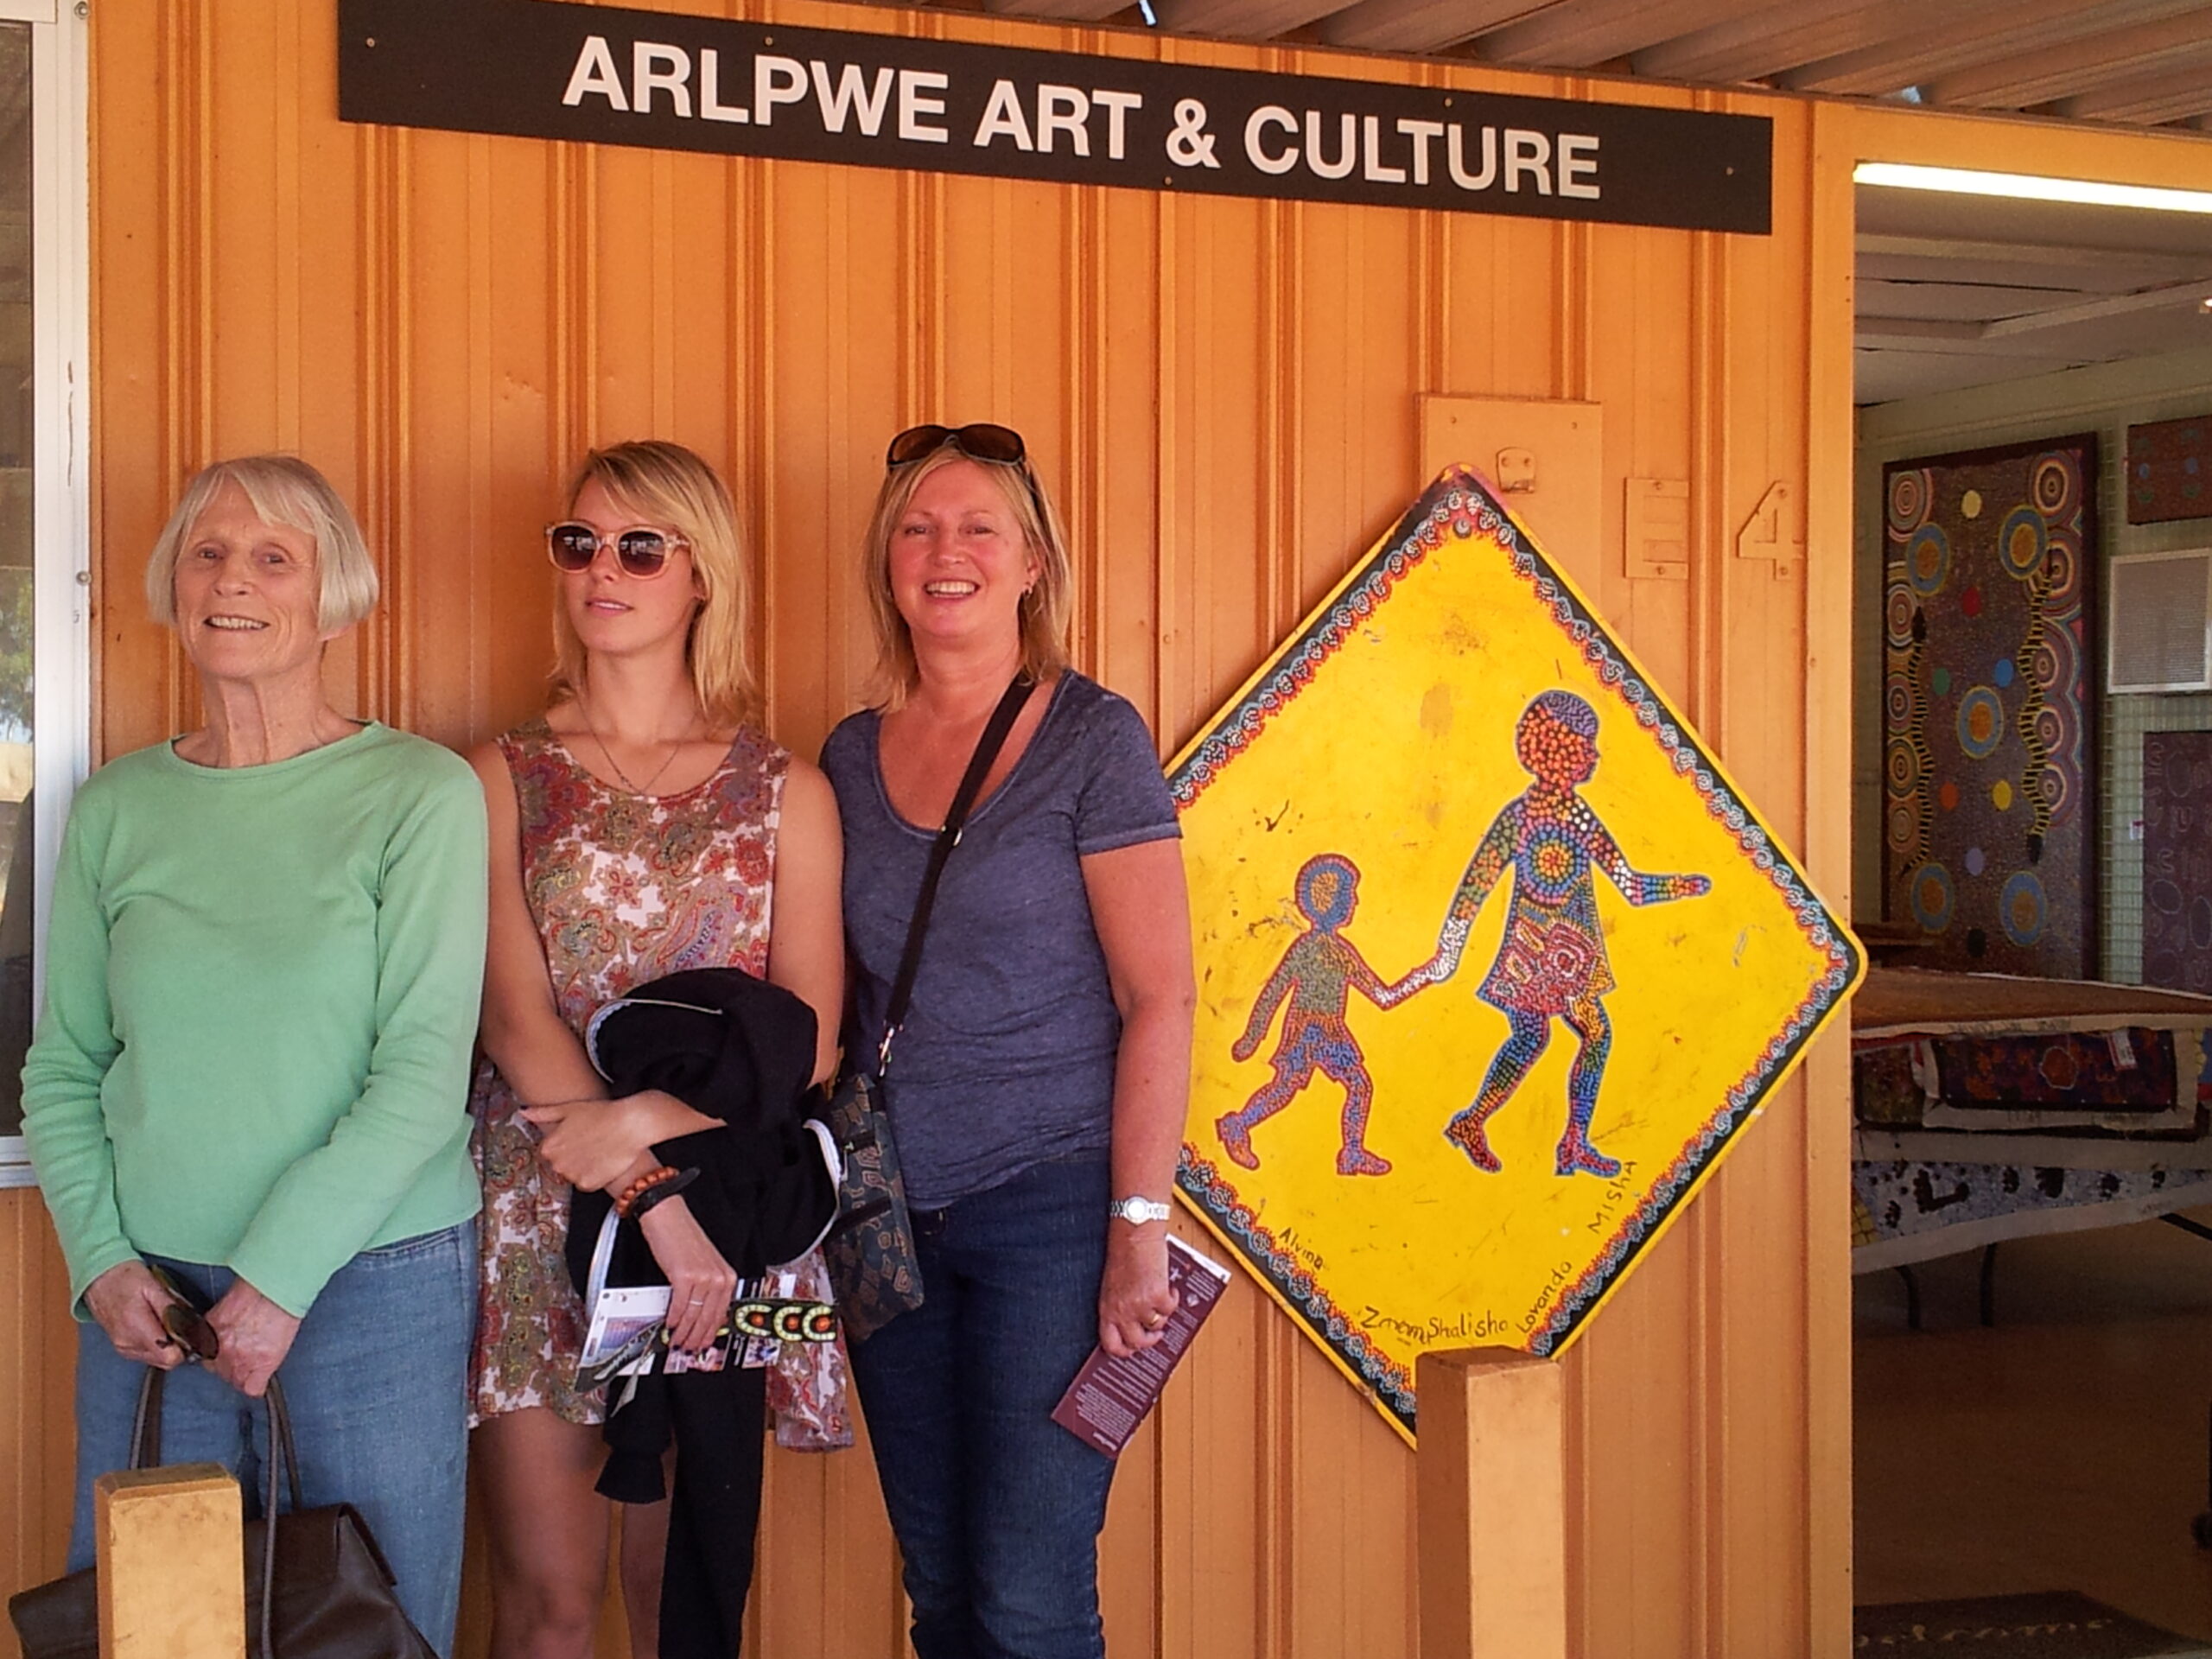 Alice Springs to Darwin via Utopia, Devils Marbles Mataranka, Daly Waters Katherine Gorge Tour 5 days